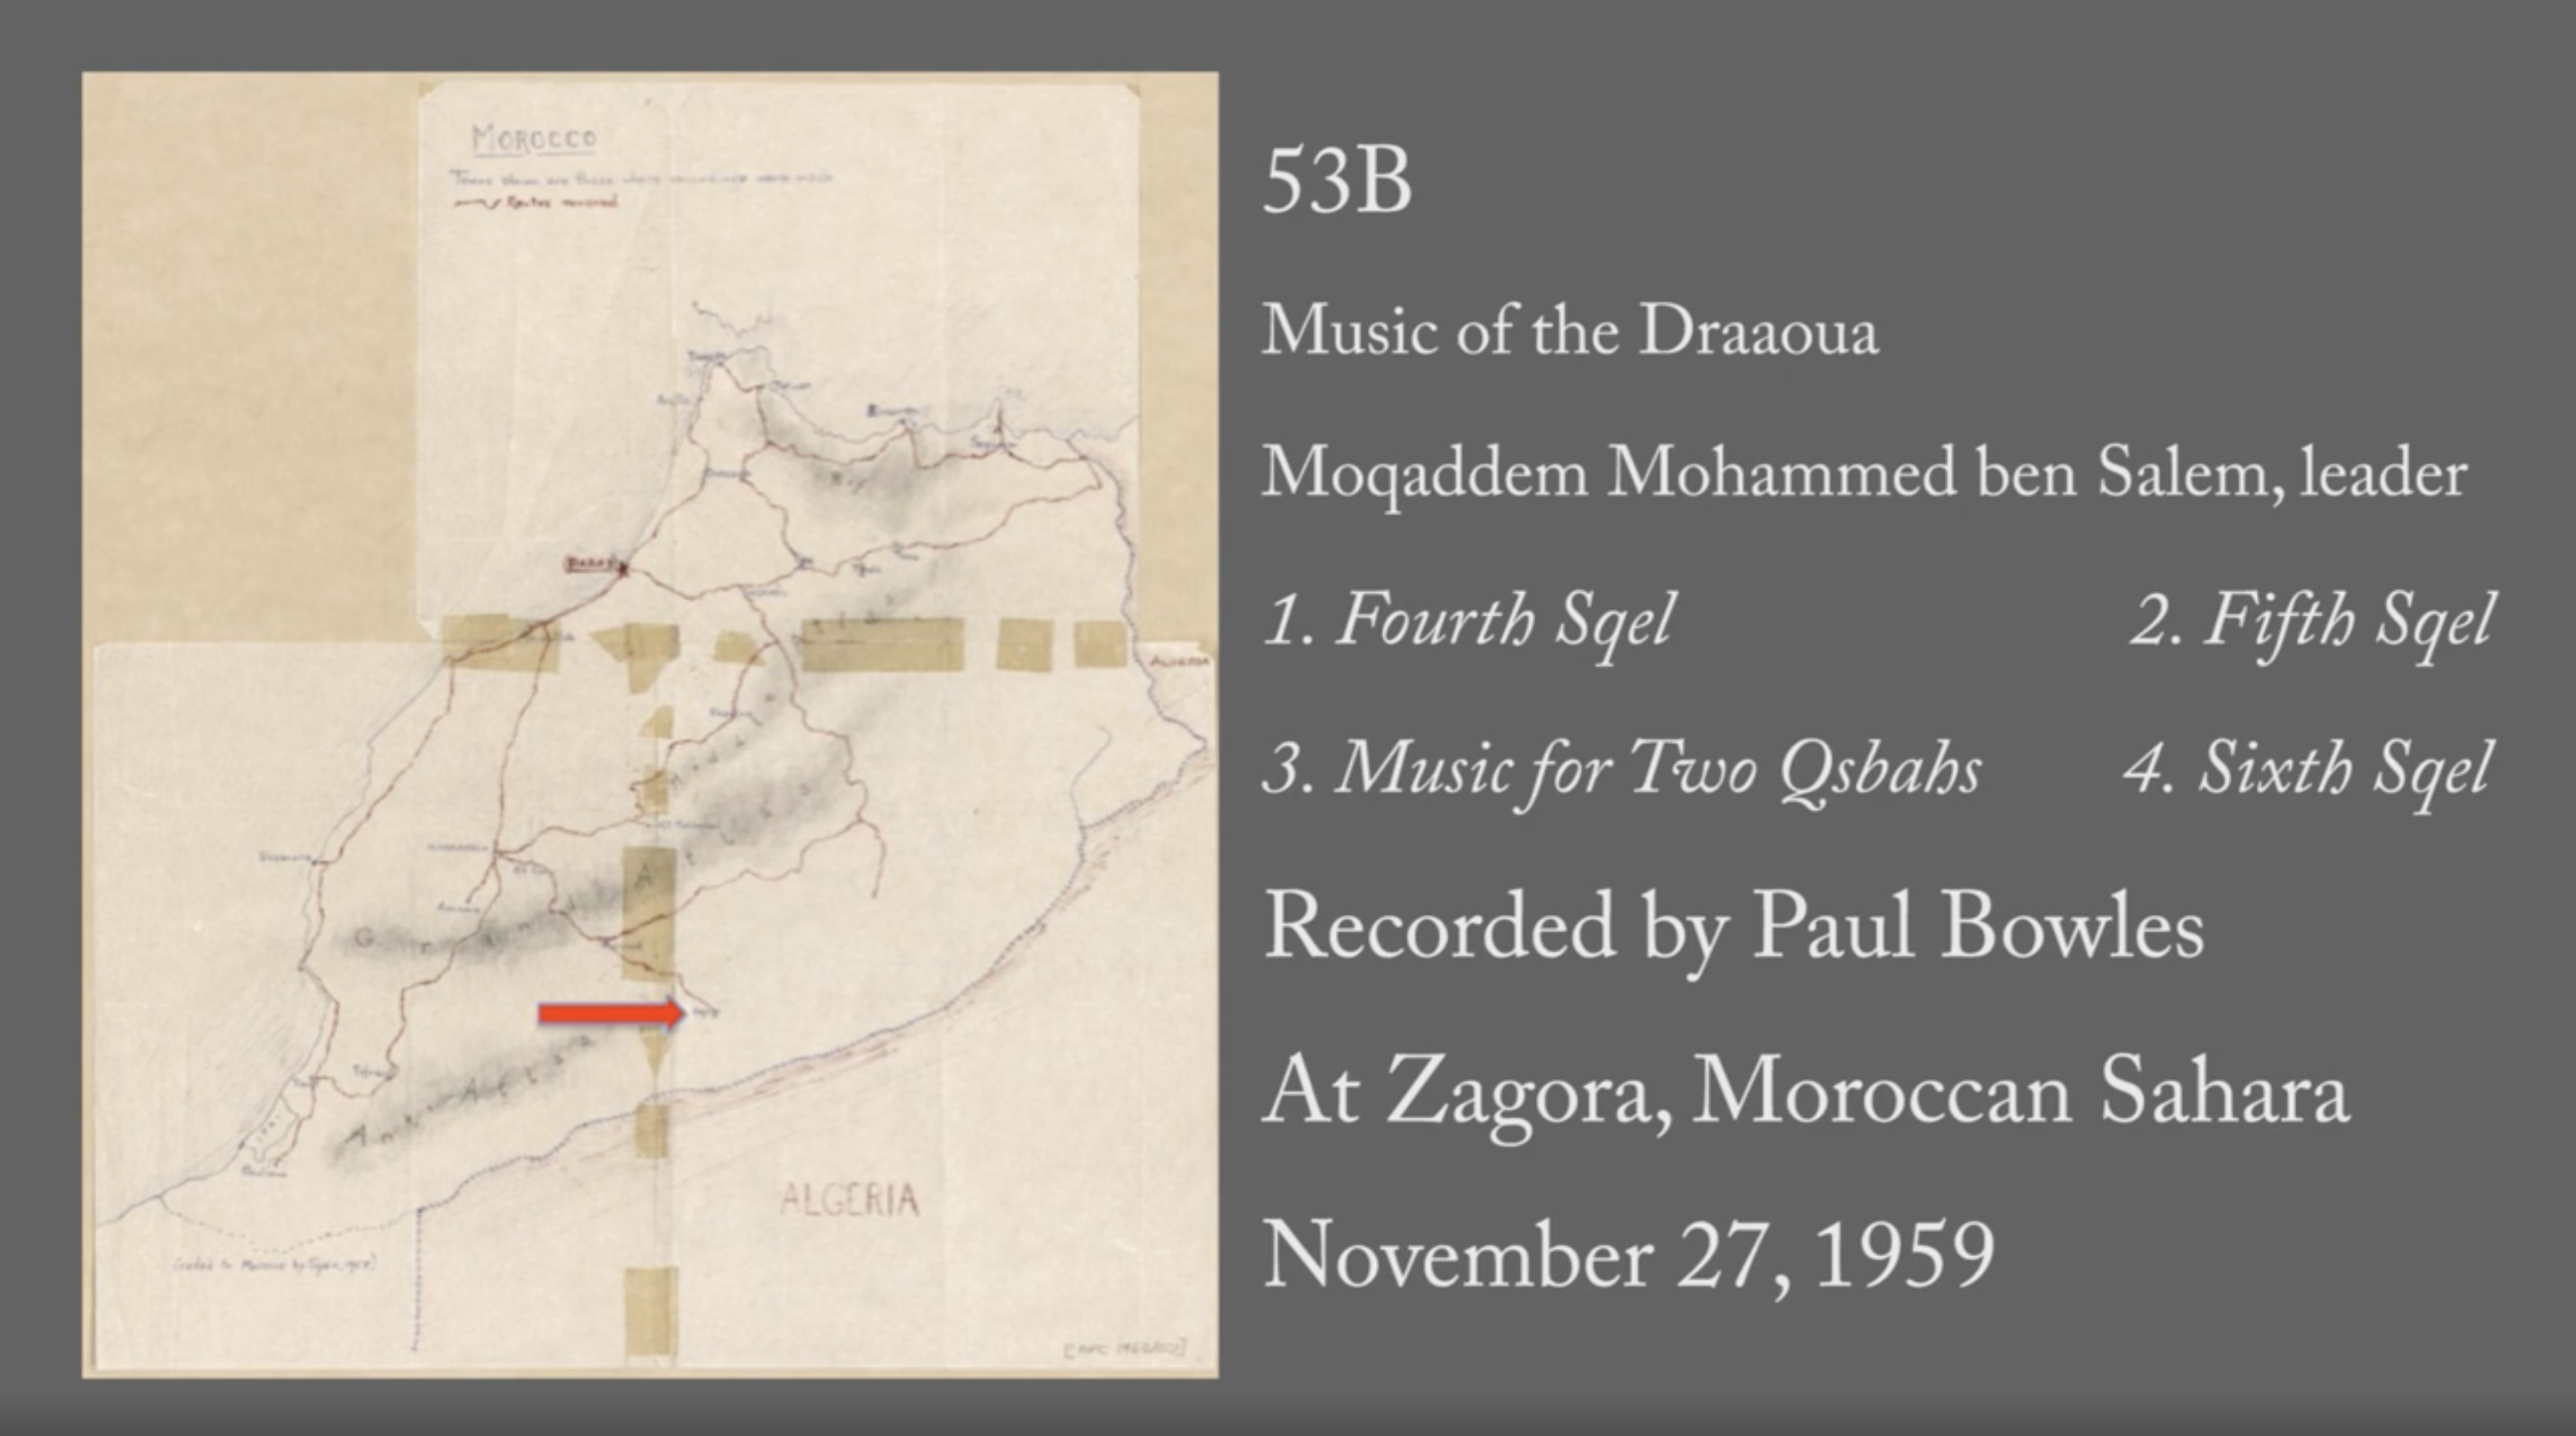  Zagora - 53B: "Fourth Sqel" (Music of the Draaoua)